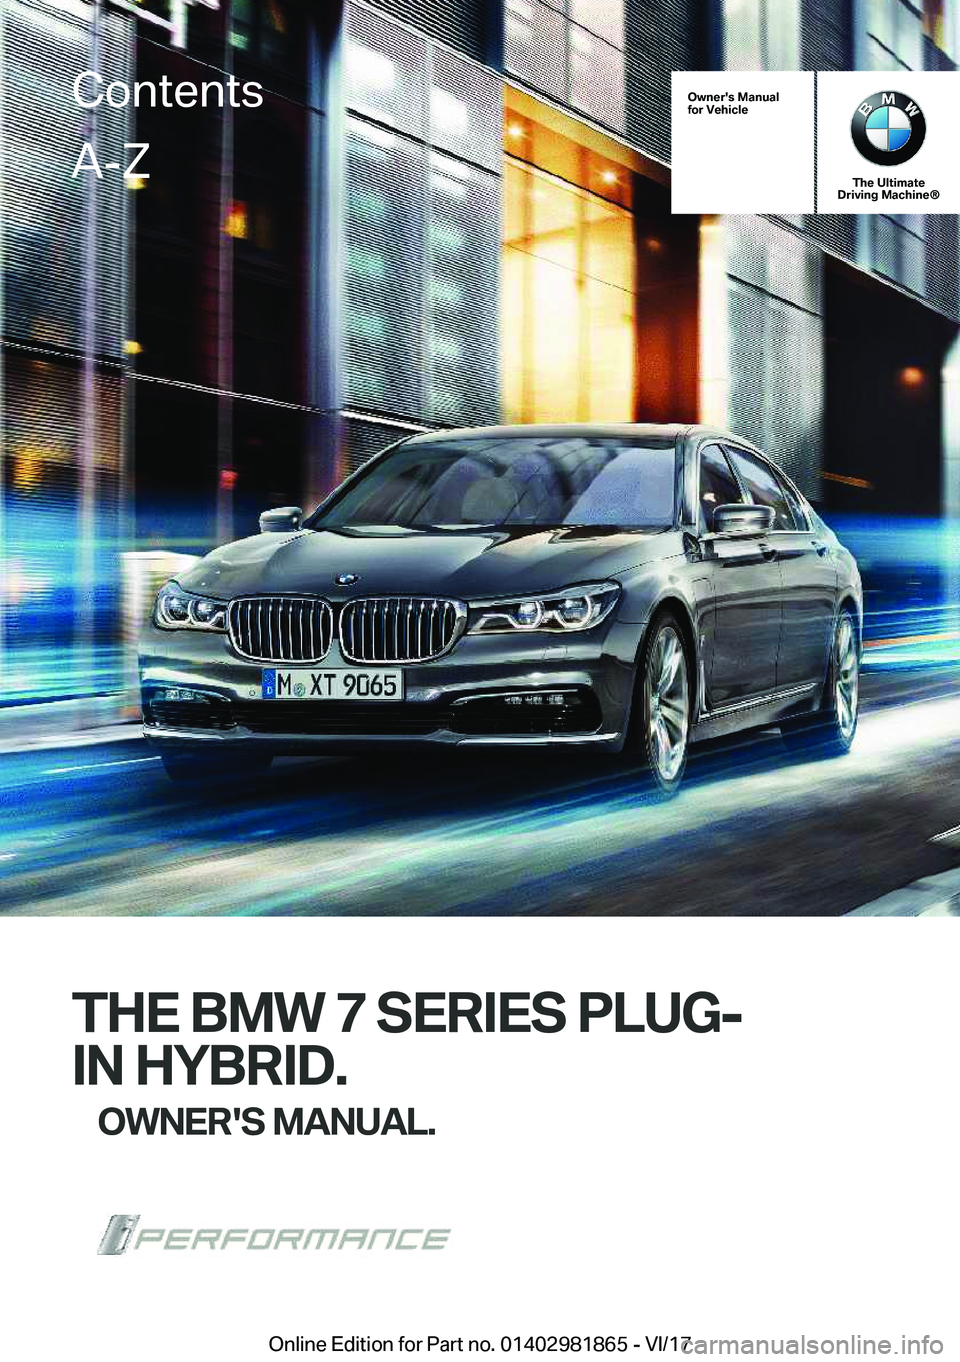 BMW 7 SERIES 2018  Owners Manual �O�w�n�e�r�'�s��M�a�n�u�a�l
�f�o�r��V�e�h�i�c�l�e
�T�h�e��U�l�t�i�m�a�t�e
�D�r�i�v�i�n�g��M�a�c�h�i�n�e�n
�T�H�E��B�M�W��7��S�E�R�I�E�S��P�L�U�G�-
�I�N��H�Y�B�R�I�D�. �O�W�N�E�R�'�S�